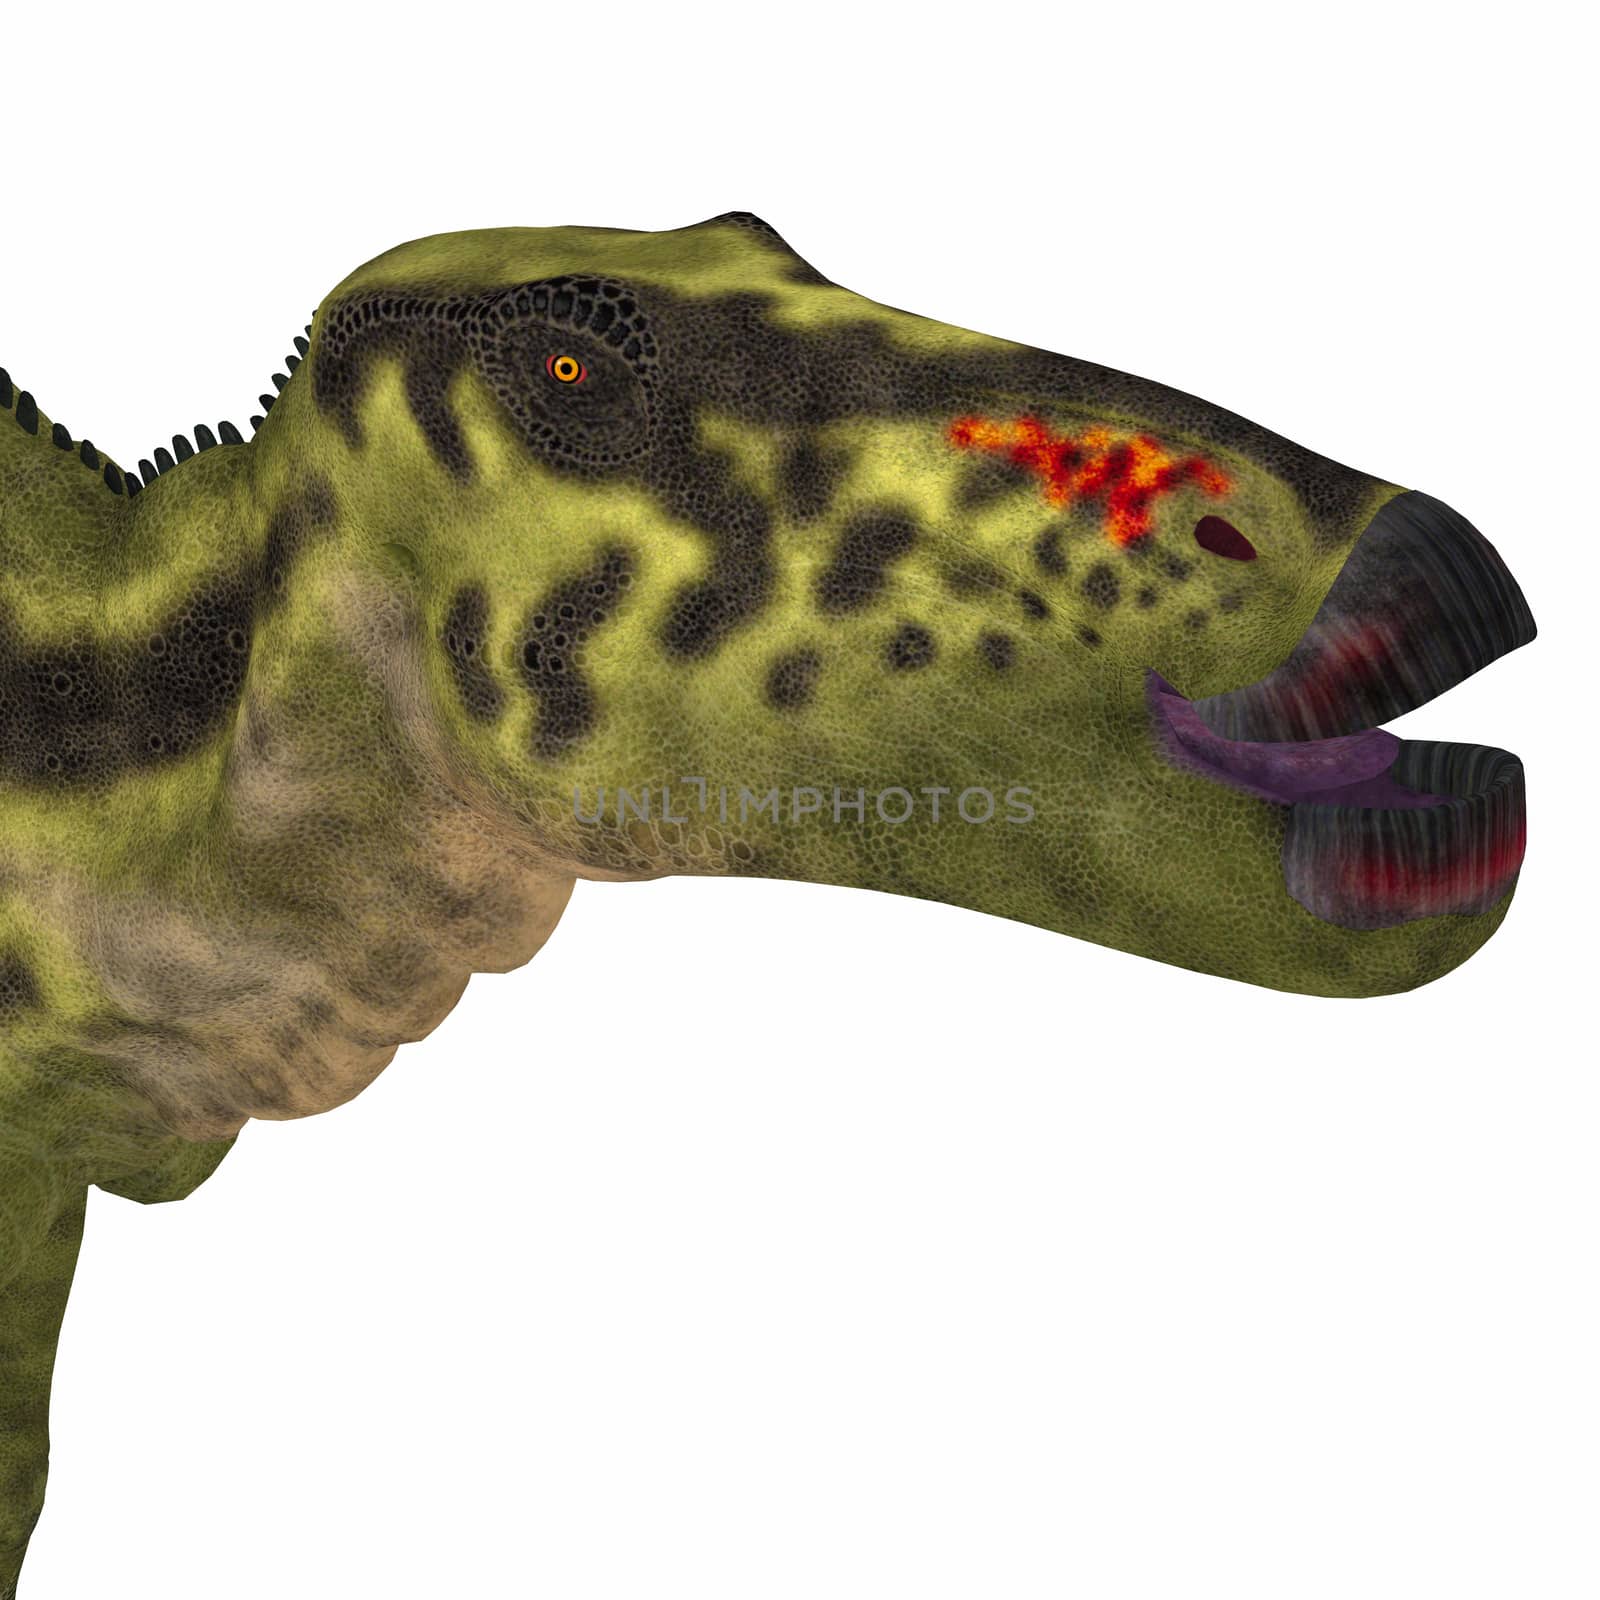 Shantungosaurus was a herbivorous Hadrosaur dinosaur that lived in China in the Cretaceous Period.